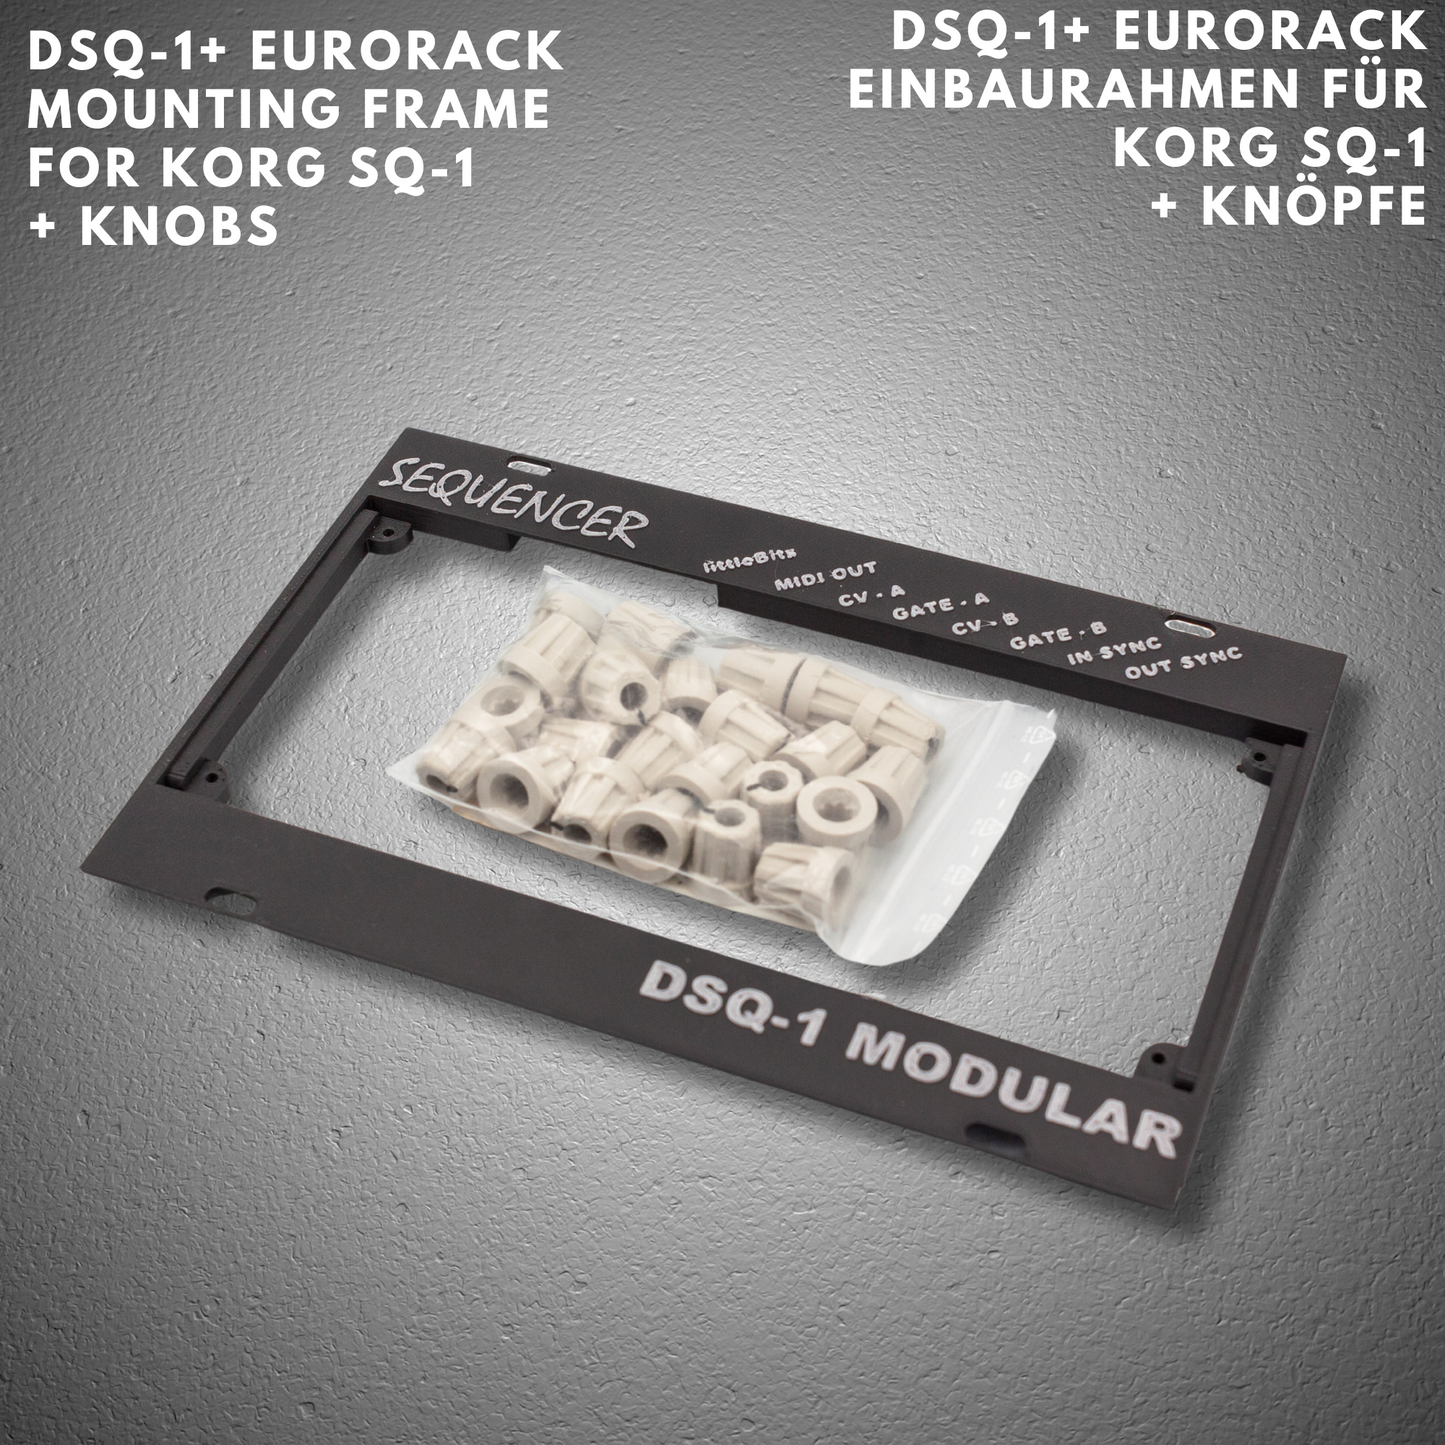 DSQ-1 Eurorack mounting frame for Korg SQ-1 + 18 button upgrade